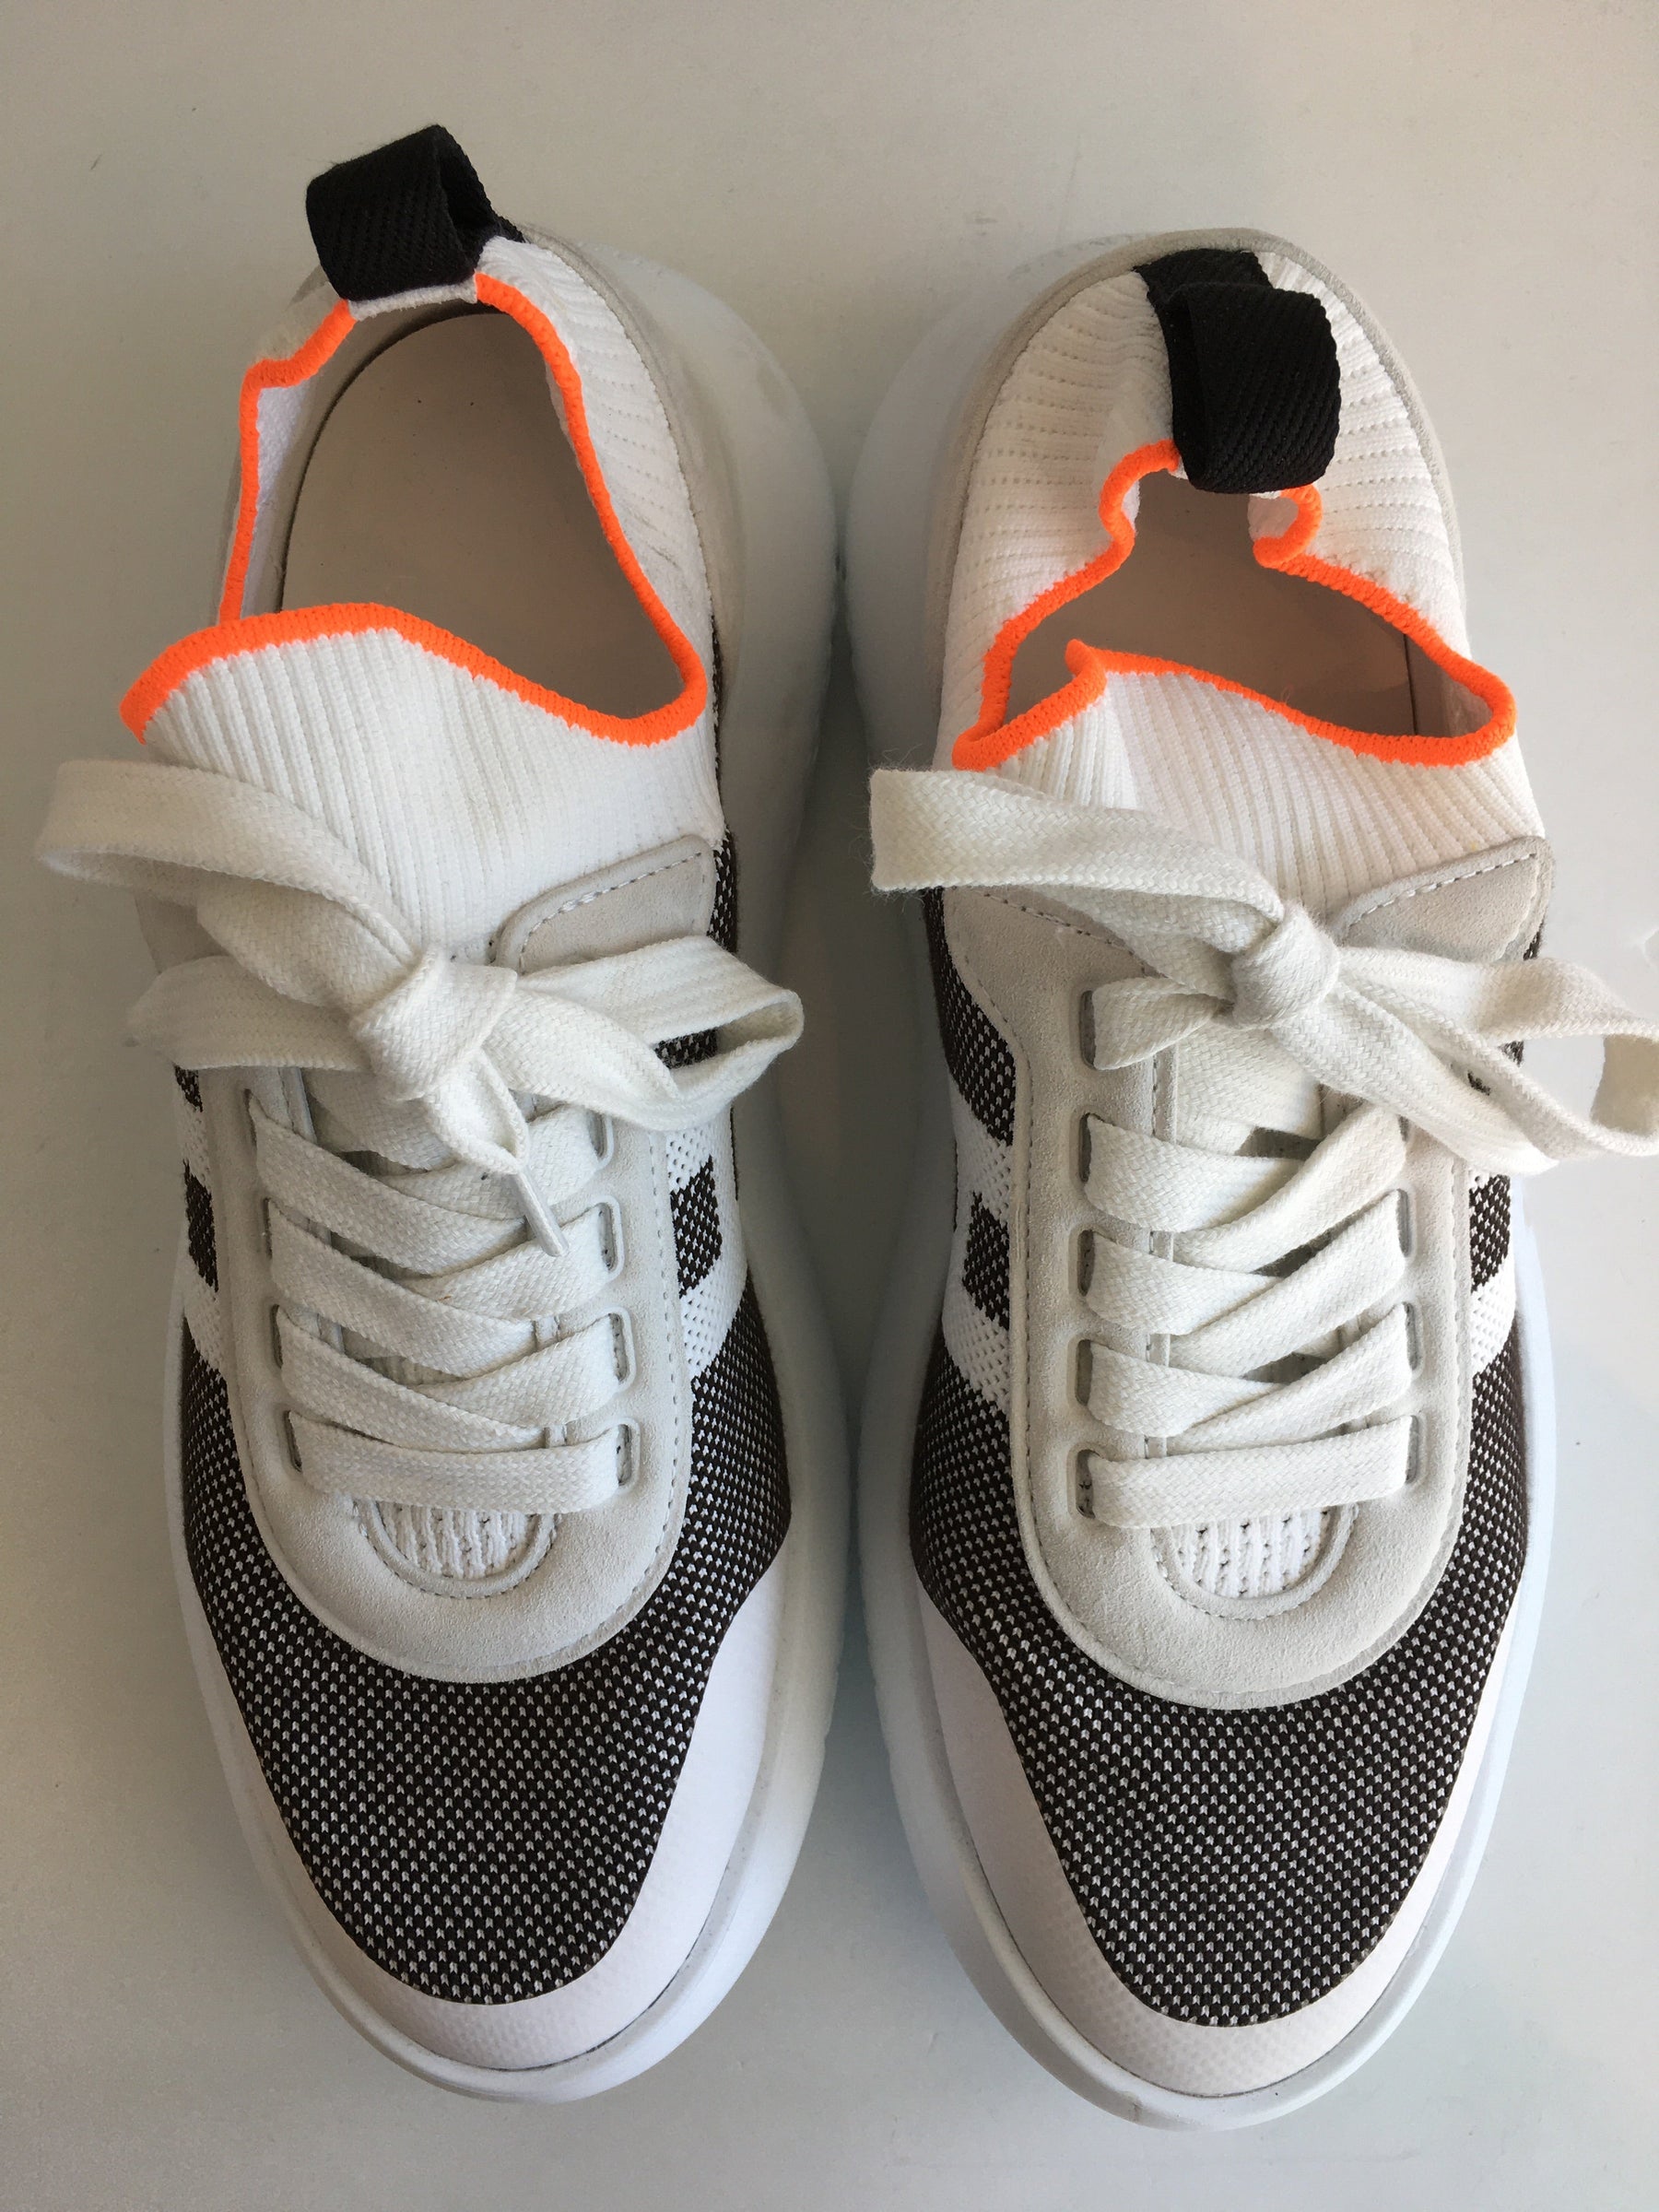 Hermès Crew Running Sneakers in White and Orange Top